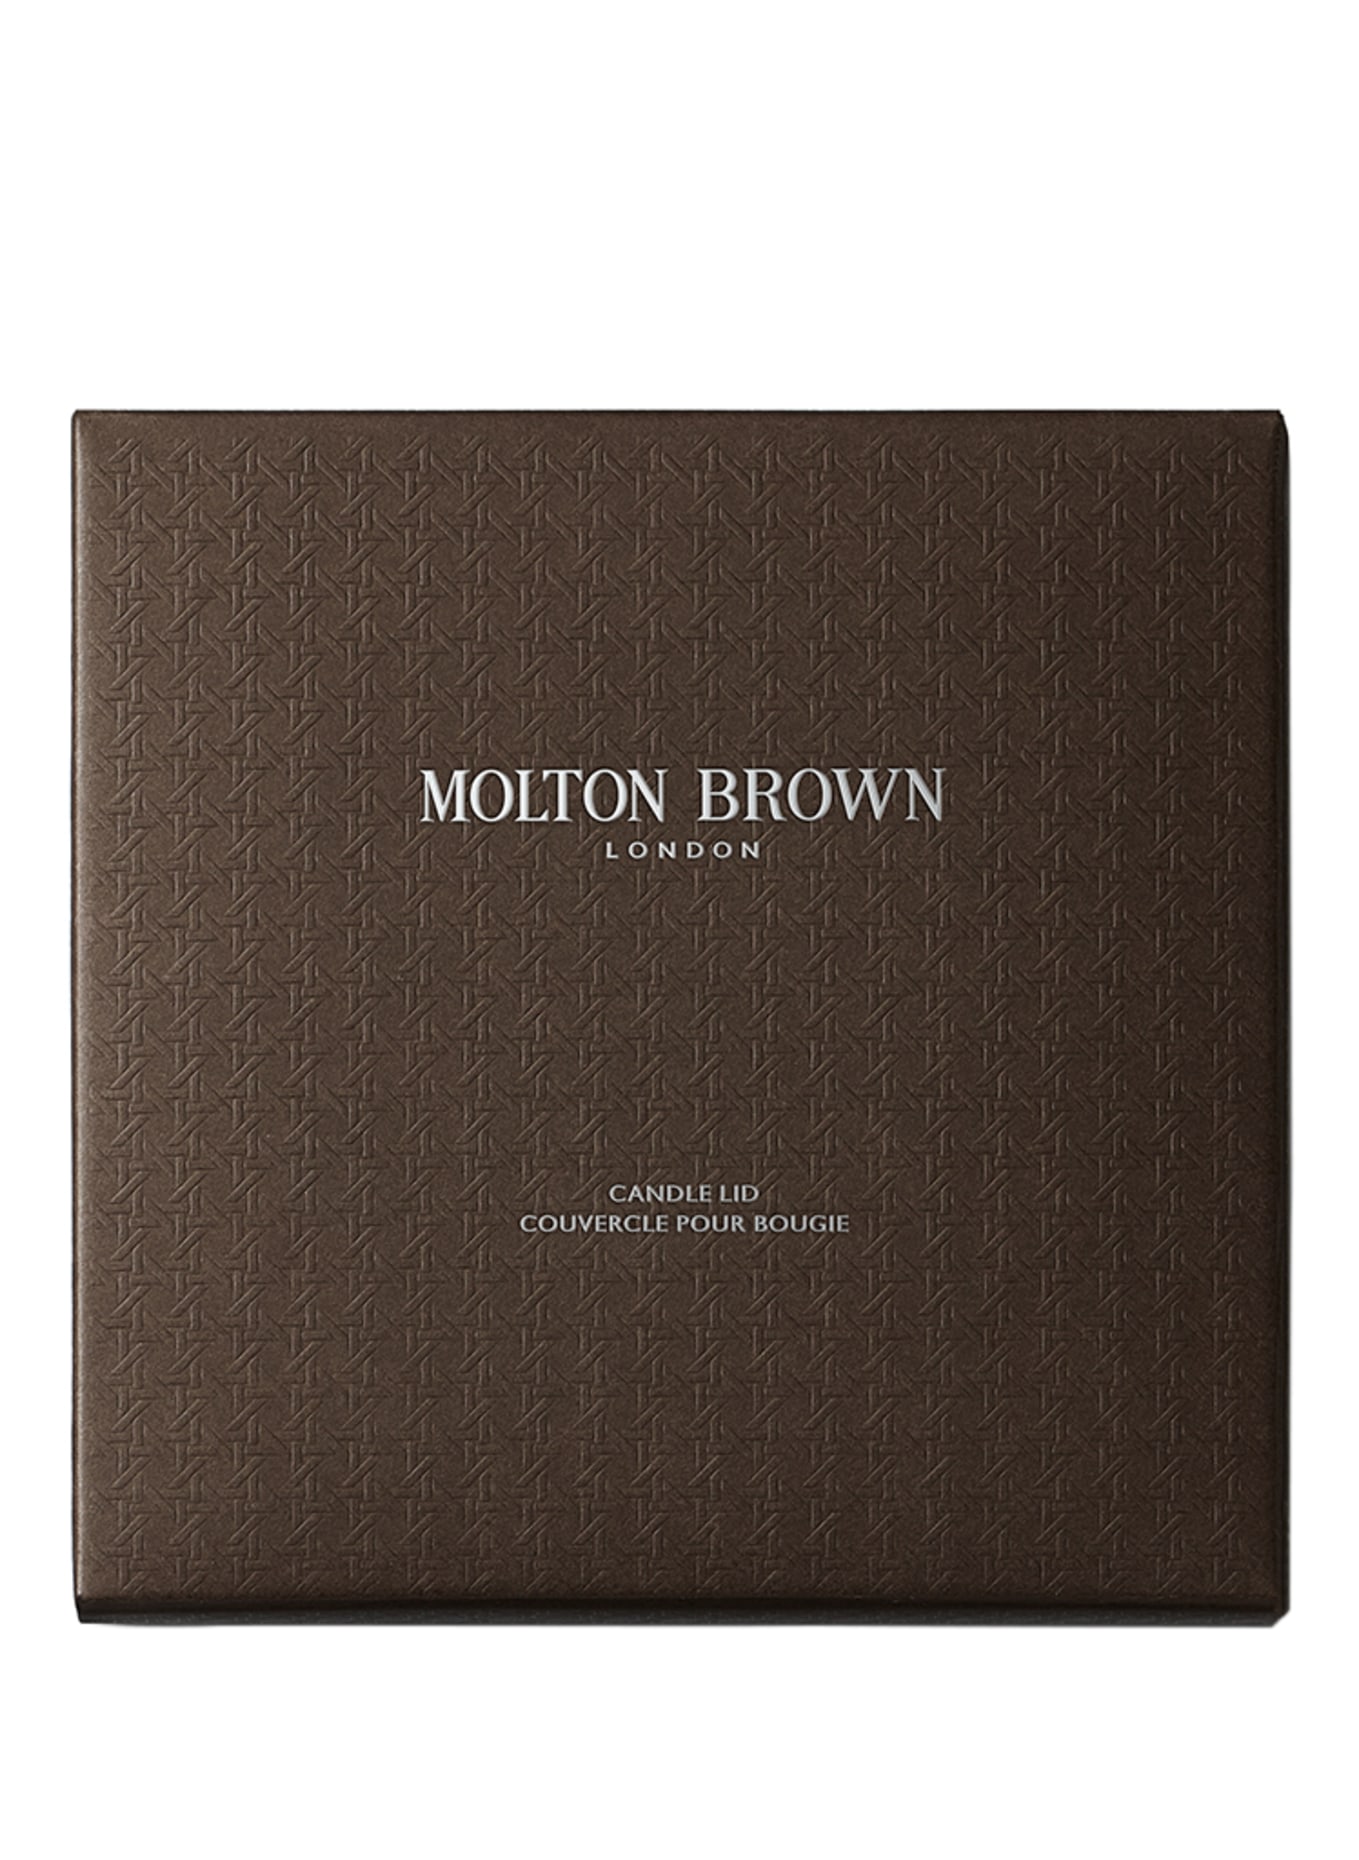 MOLTON BROWN LUXURY CANDLE LID (Bild 2)